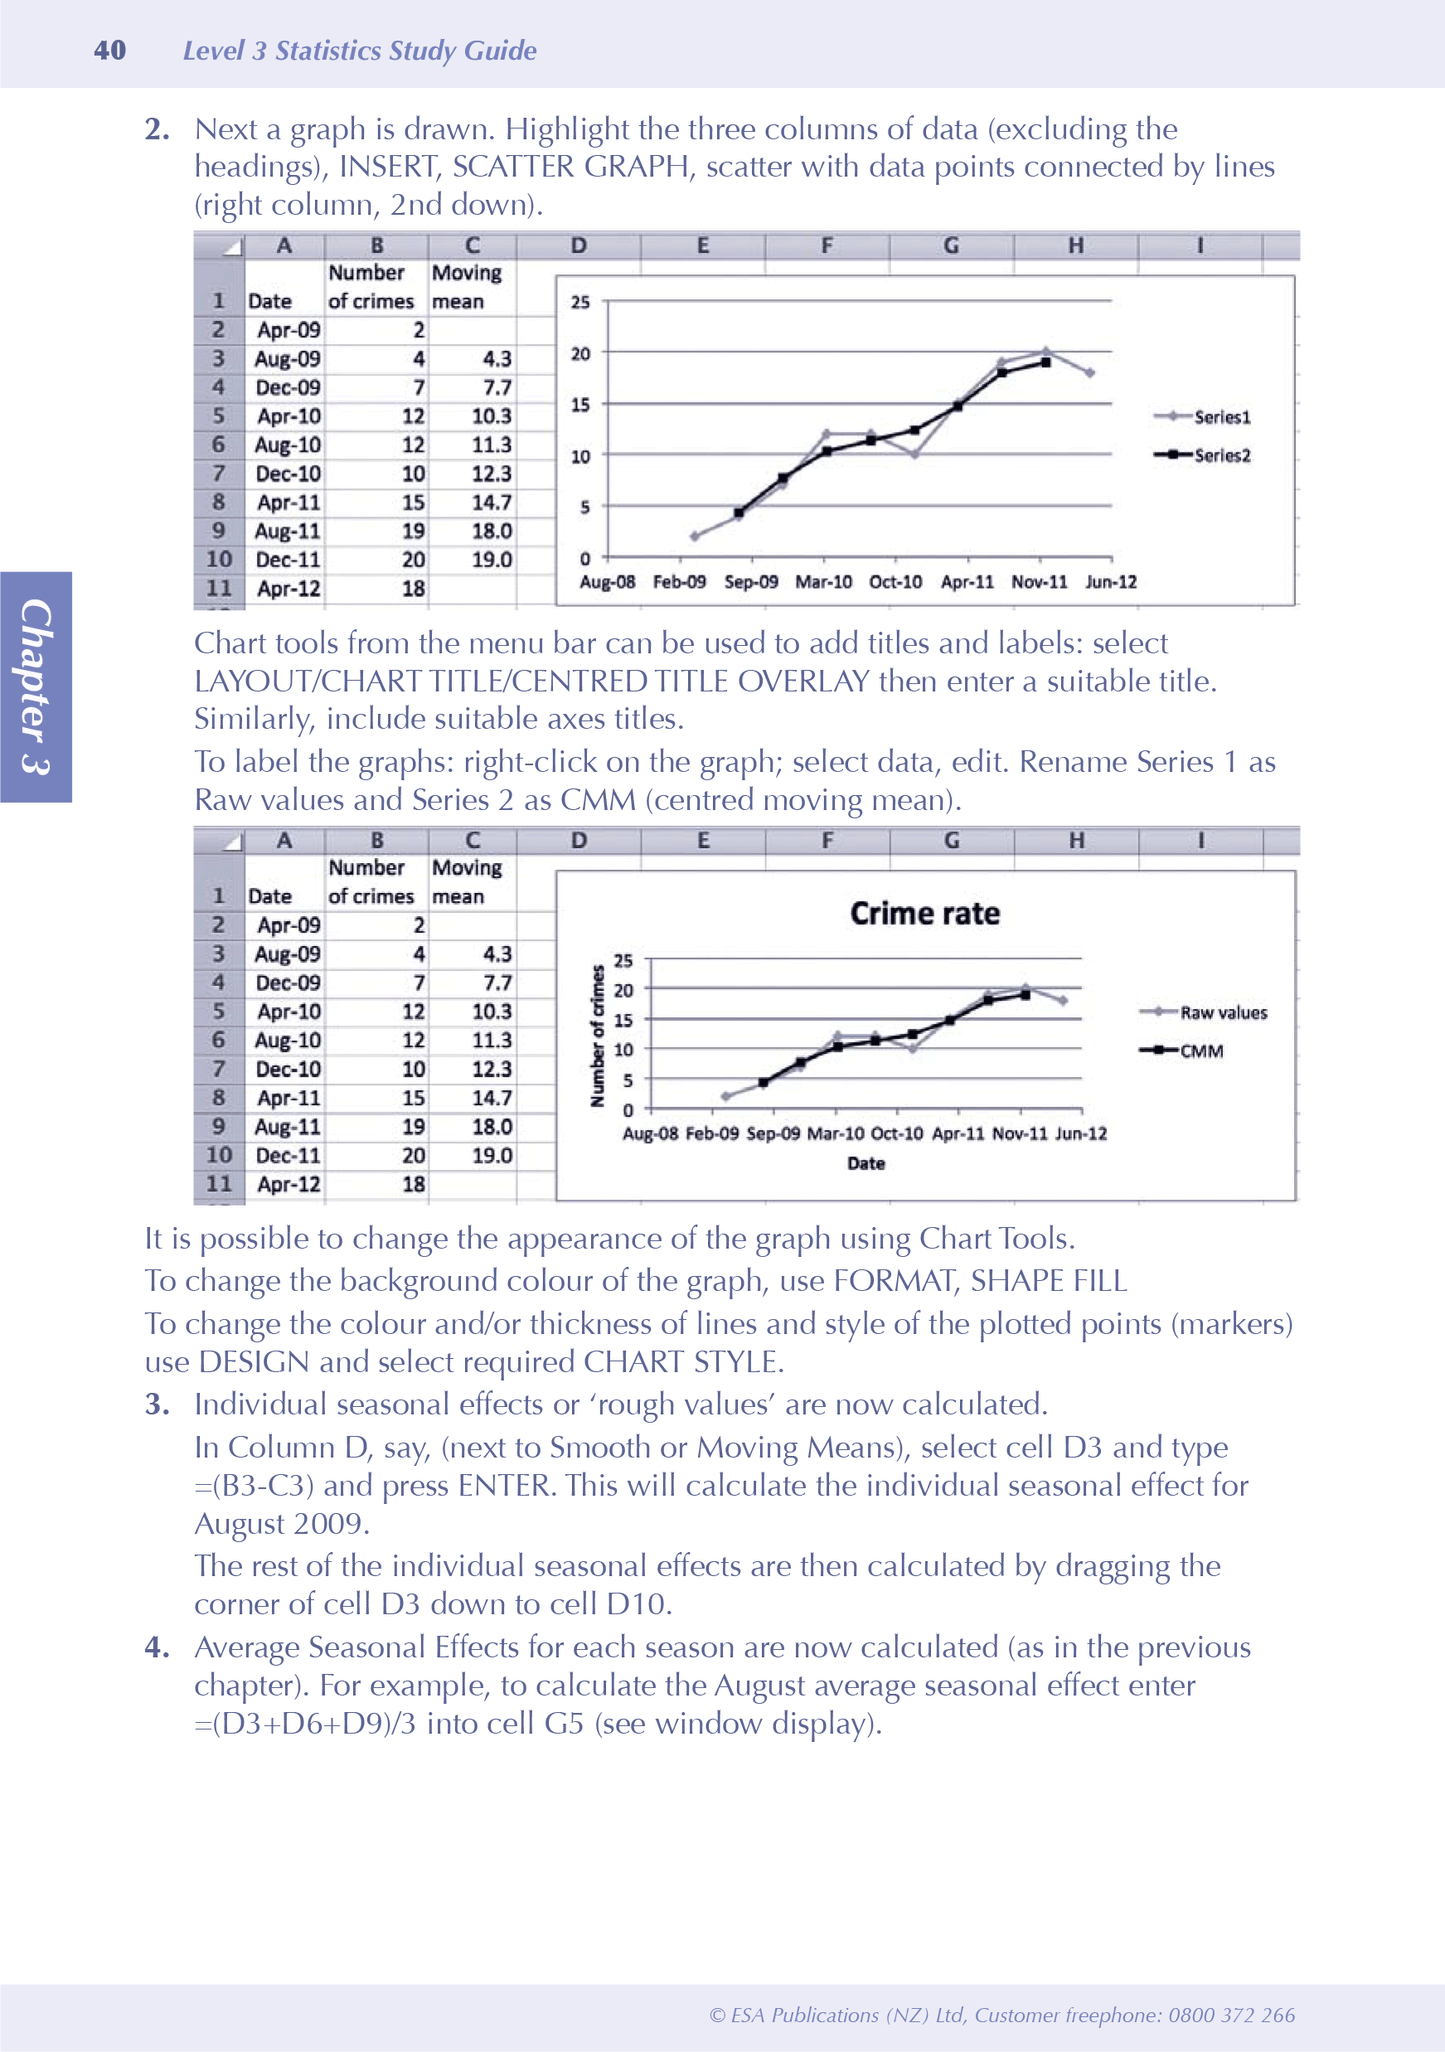 Level 3 Statistics ESA Study Guide